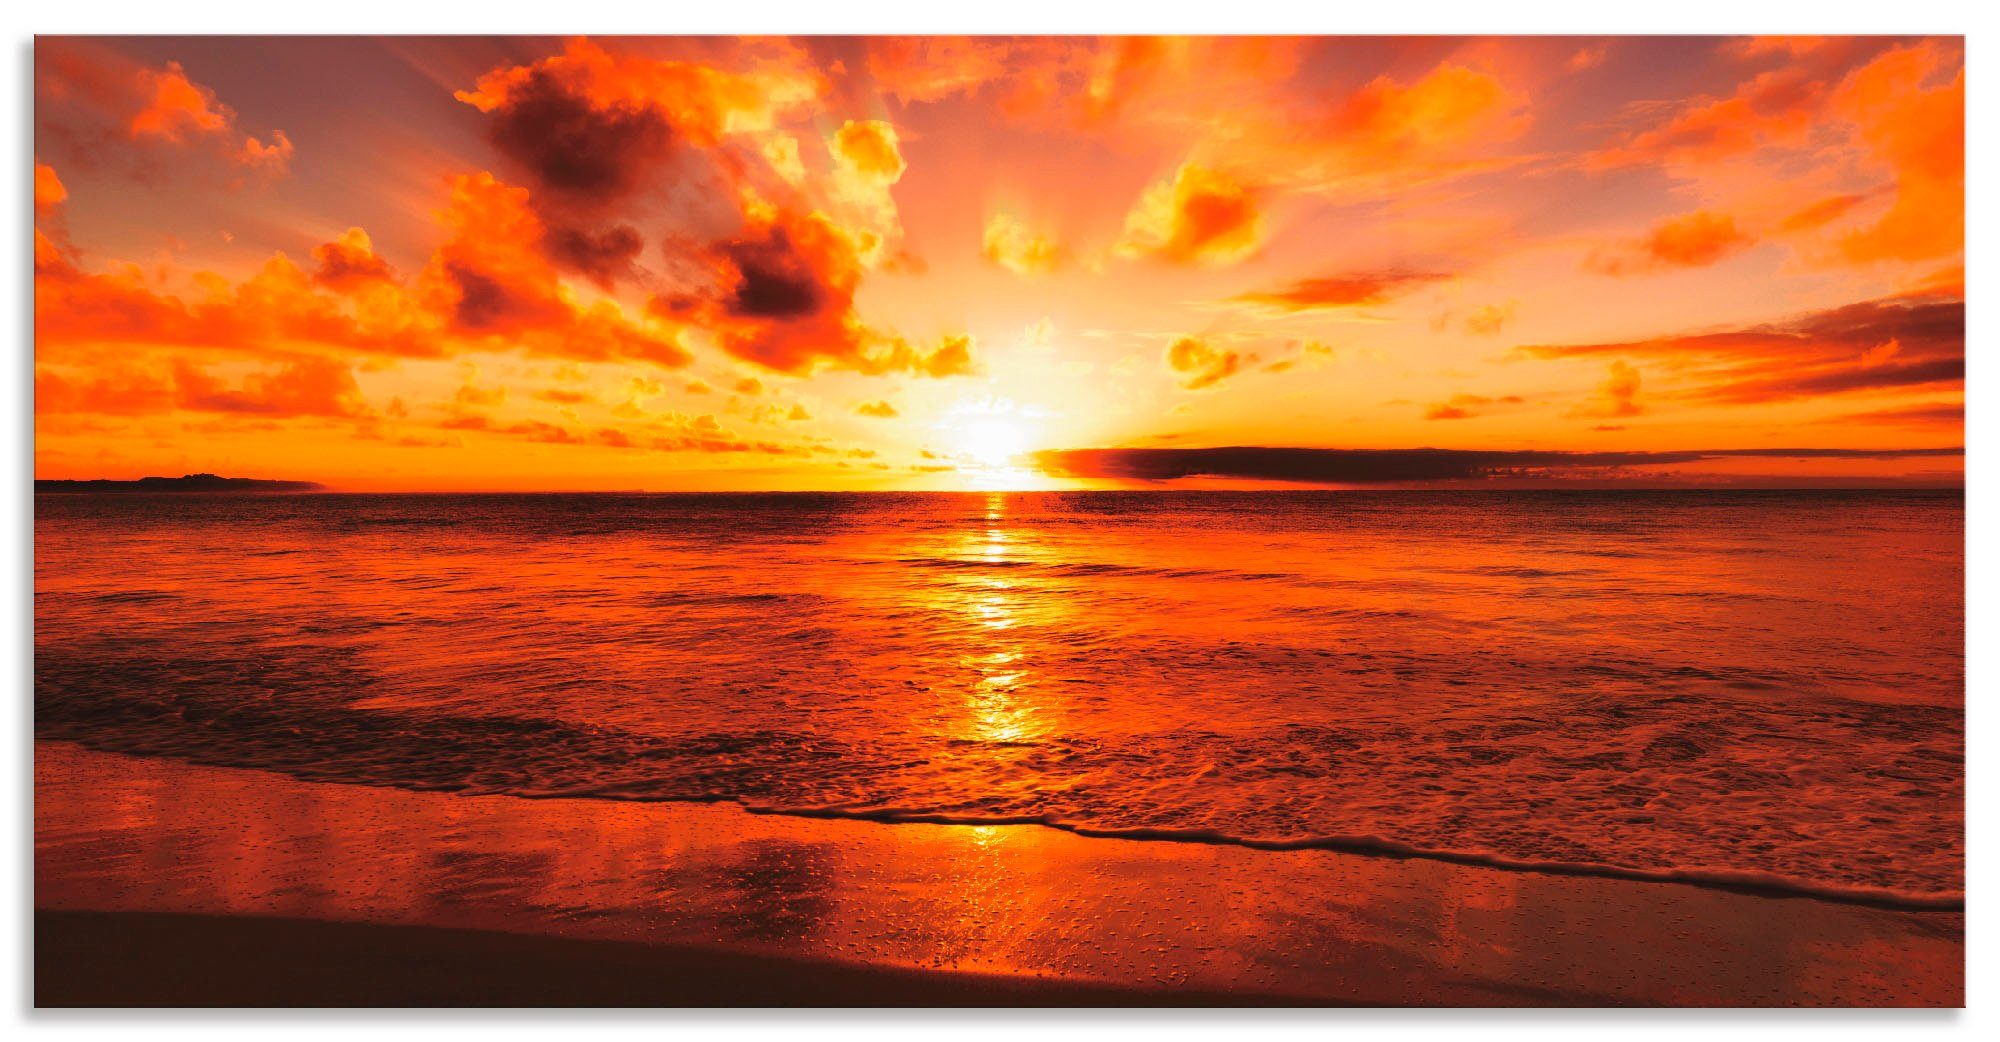 Artland Keukenwand Mooie zonsondergang strand zelfklevend in vele maten - spatscherm keuken achter kookplaat en spoelbak als wandbescherming tegen vet, water en vuil - achterwand,